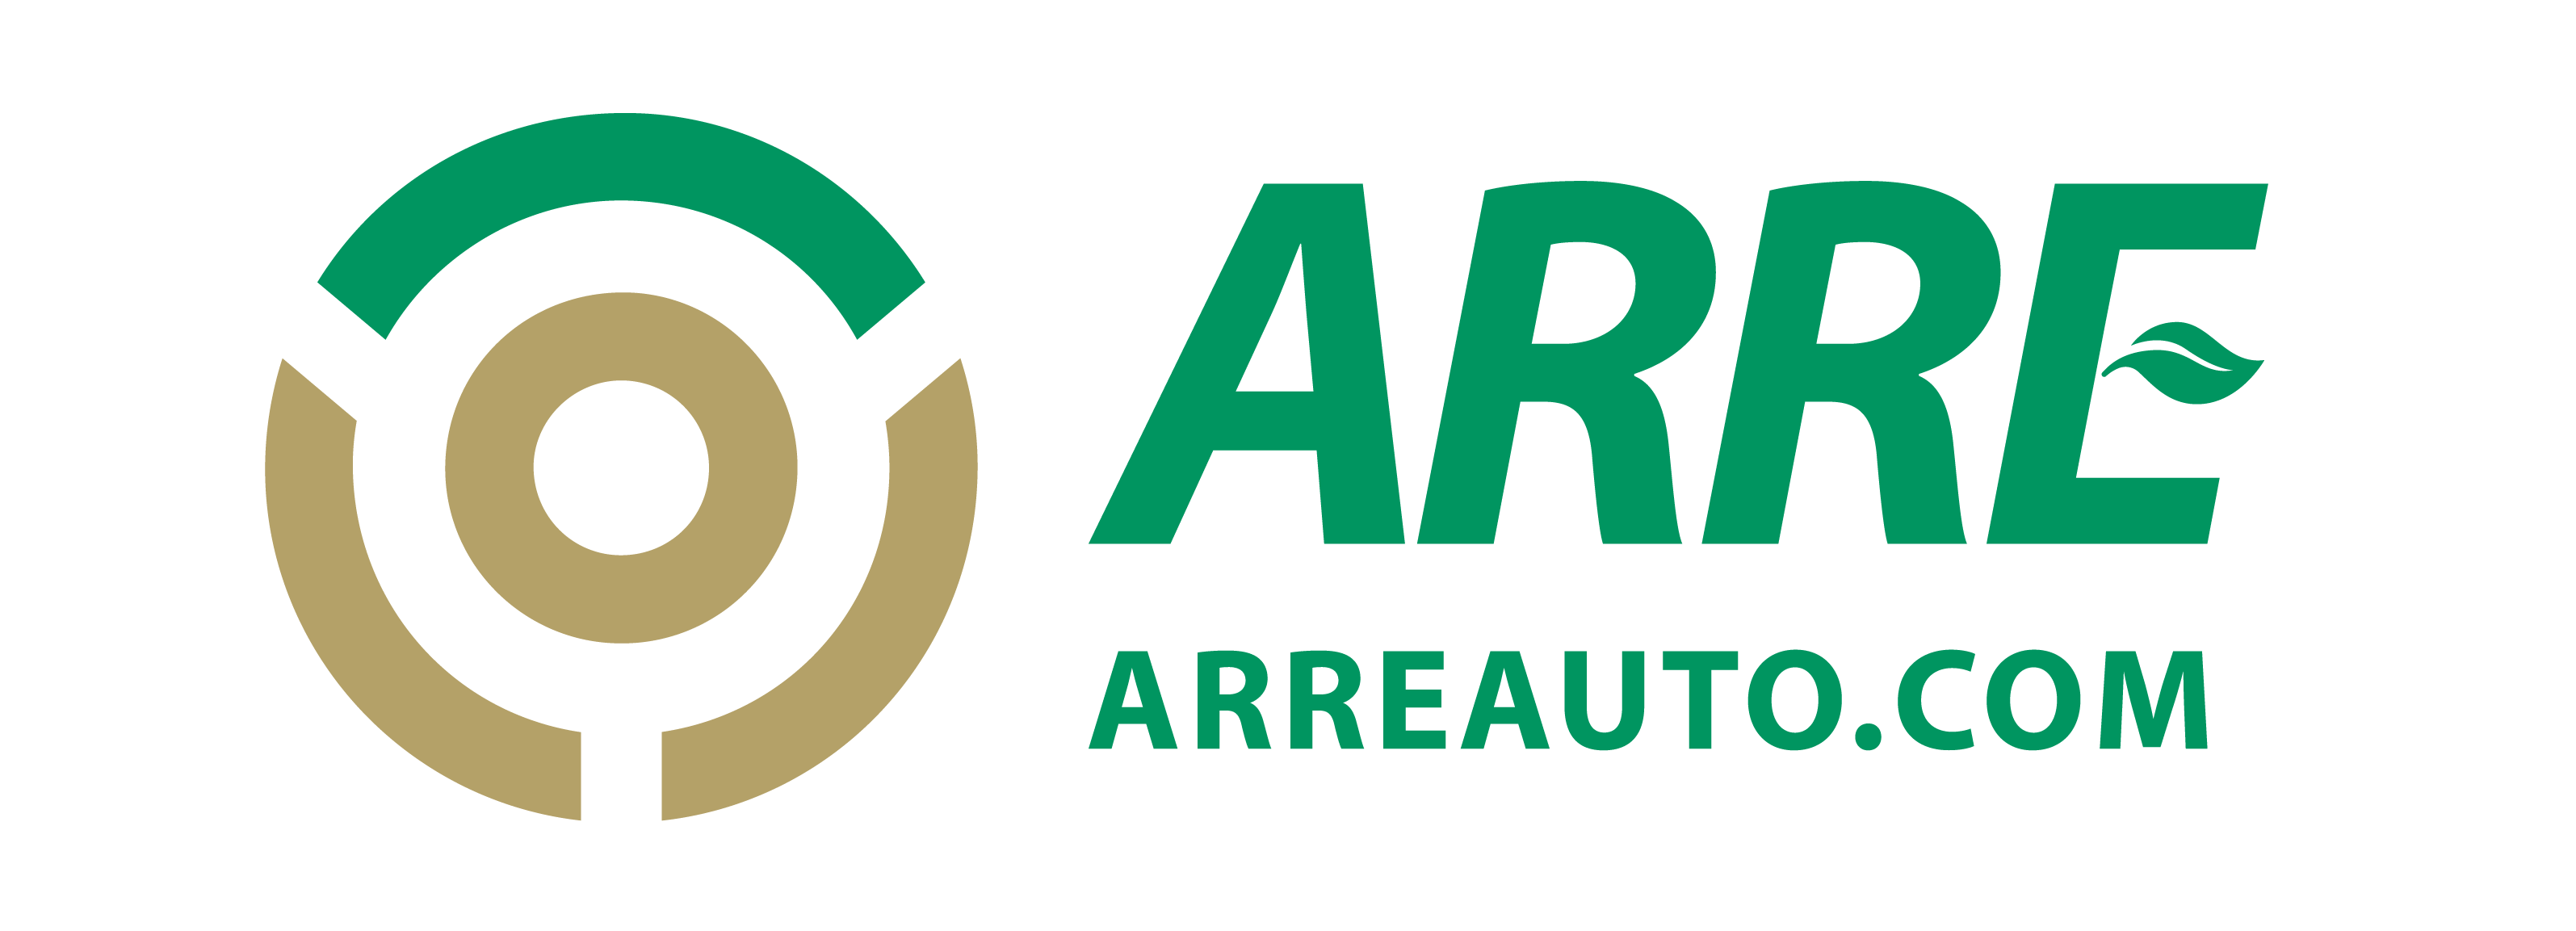 Logo Arreauto